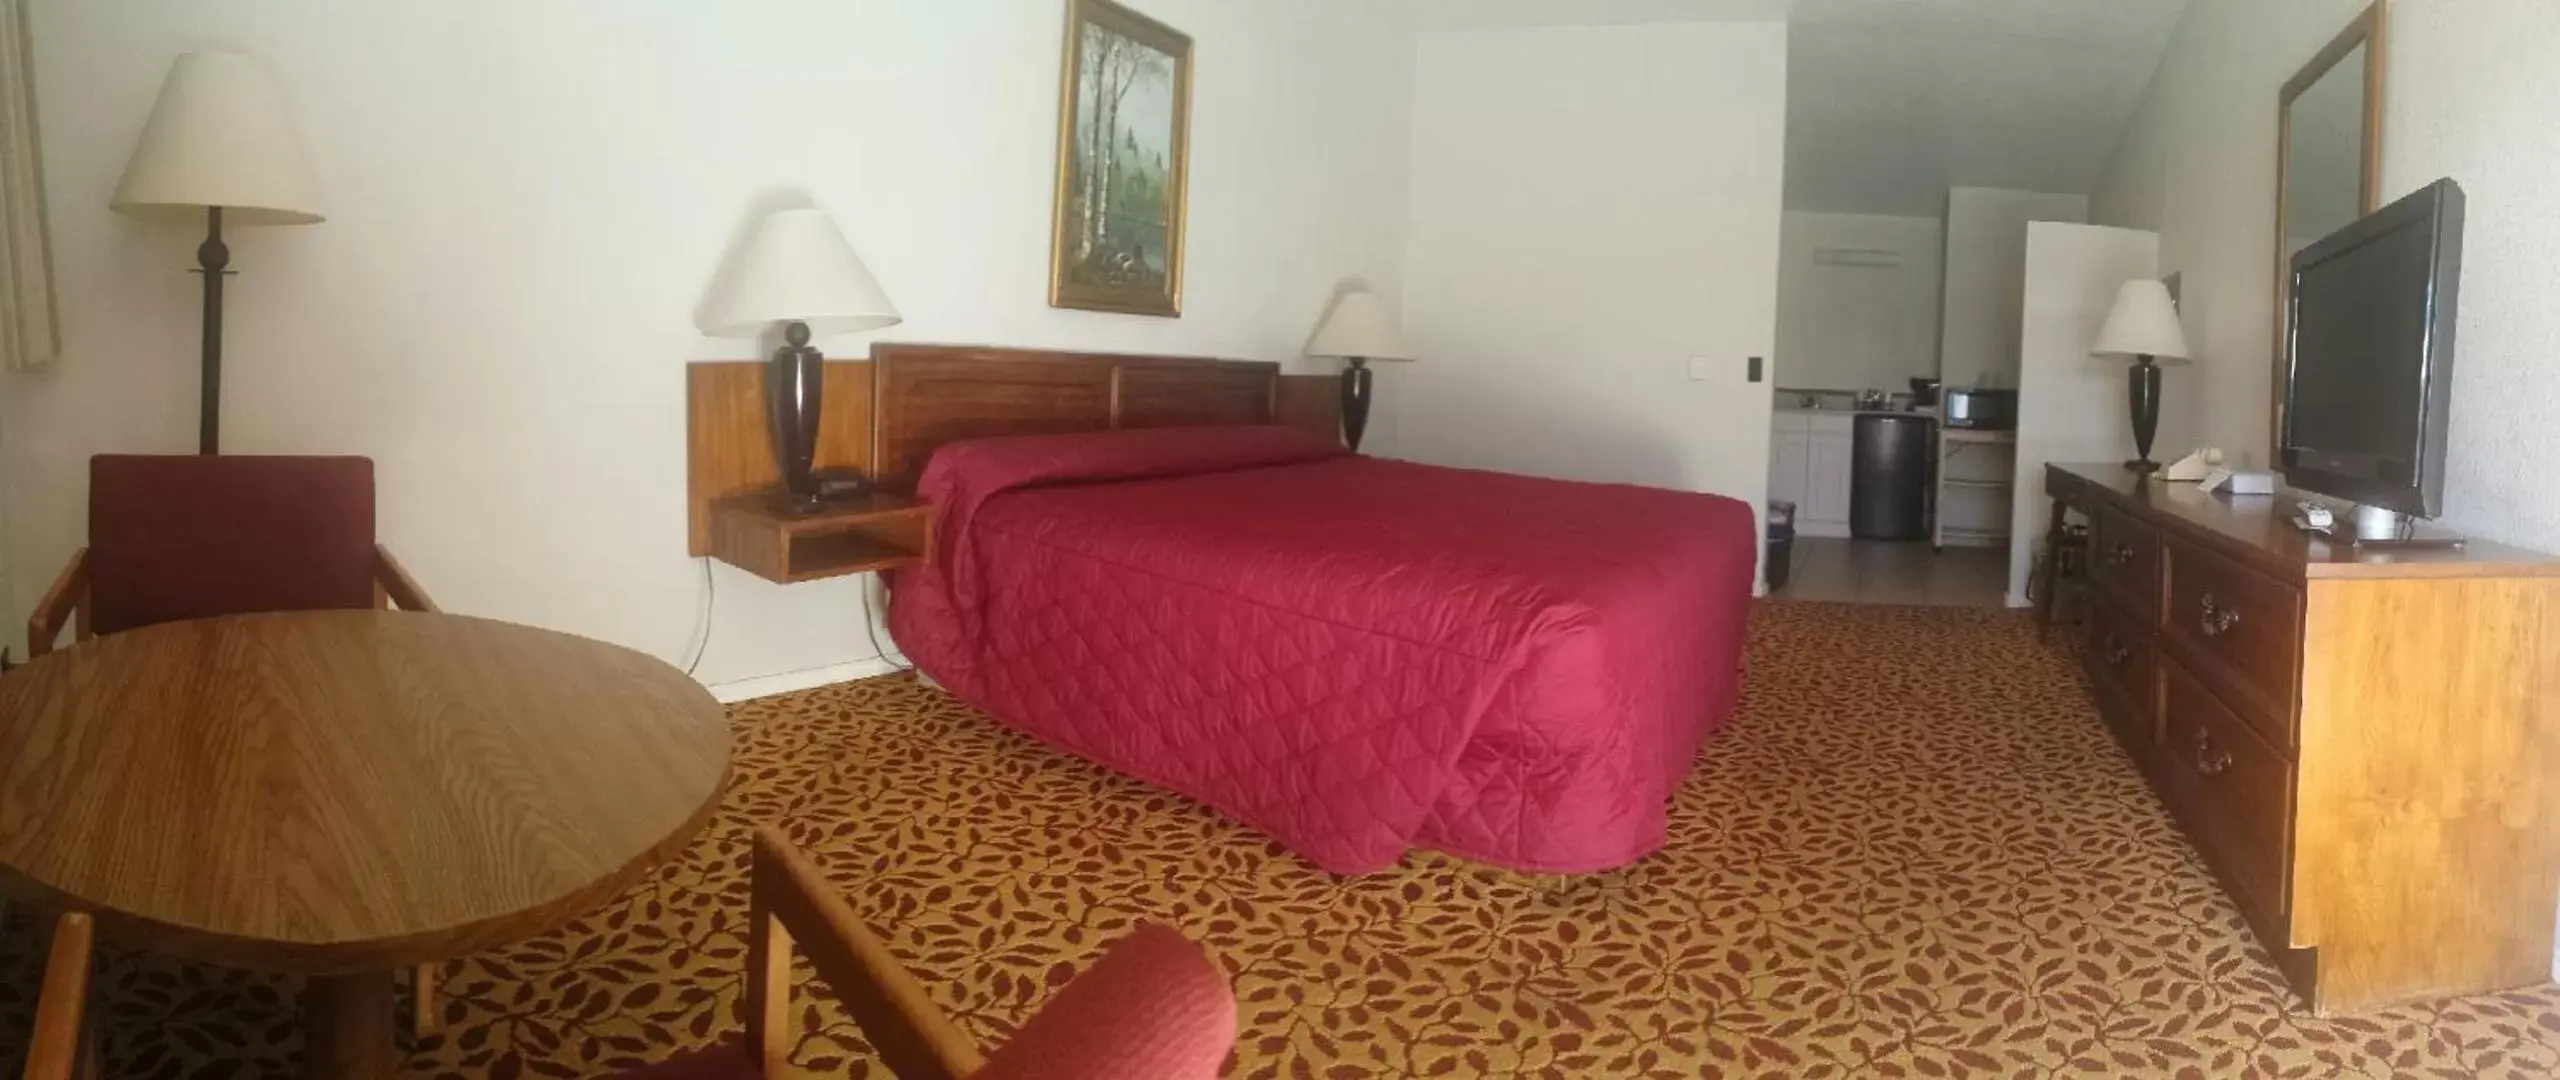 Bed in Western Inn Motel & RV Park